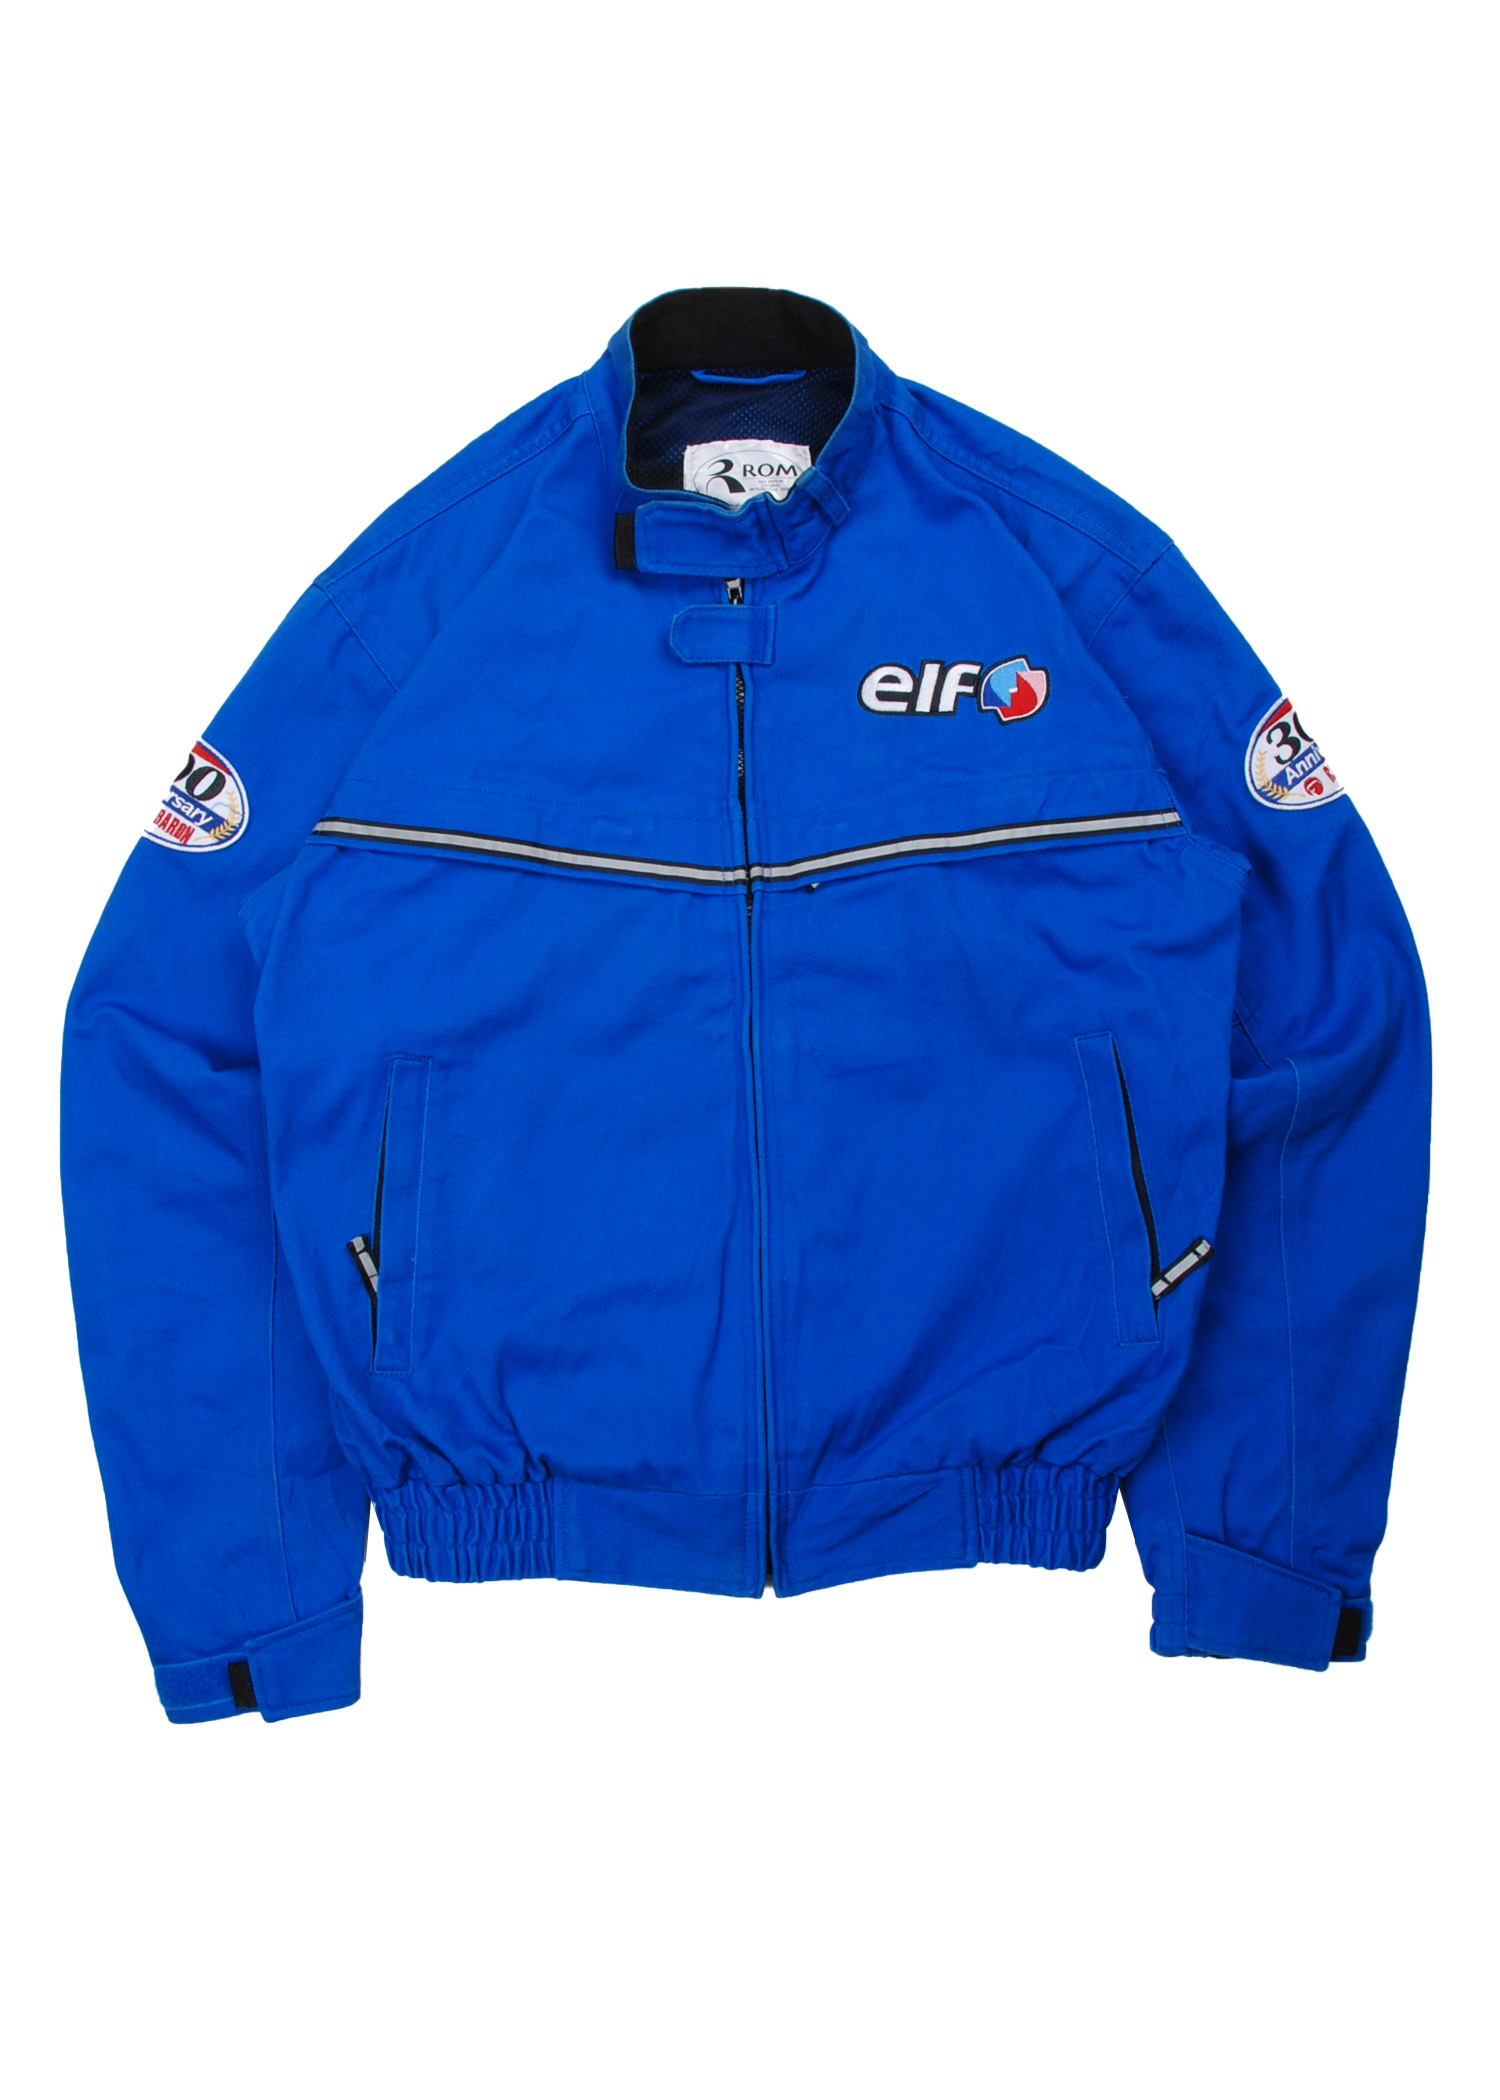 elf blue racing jacket